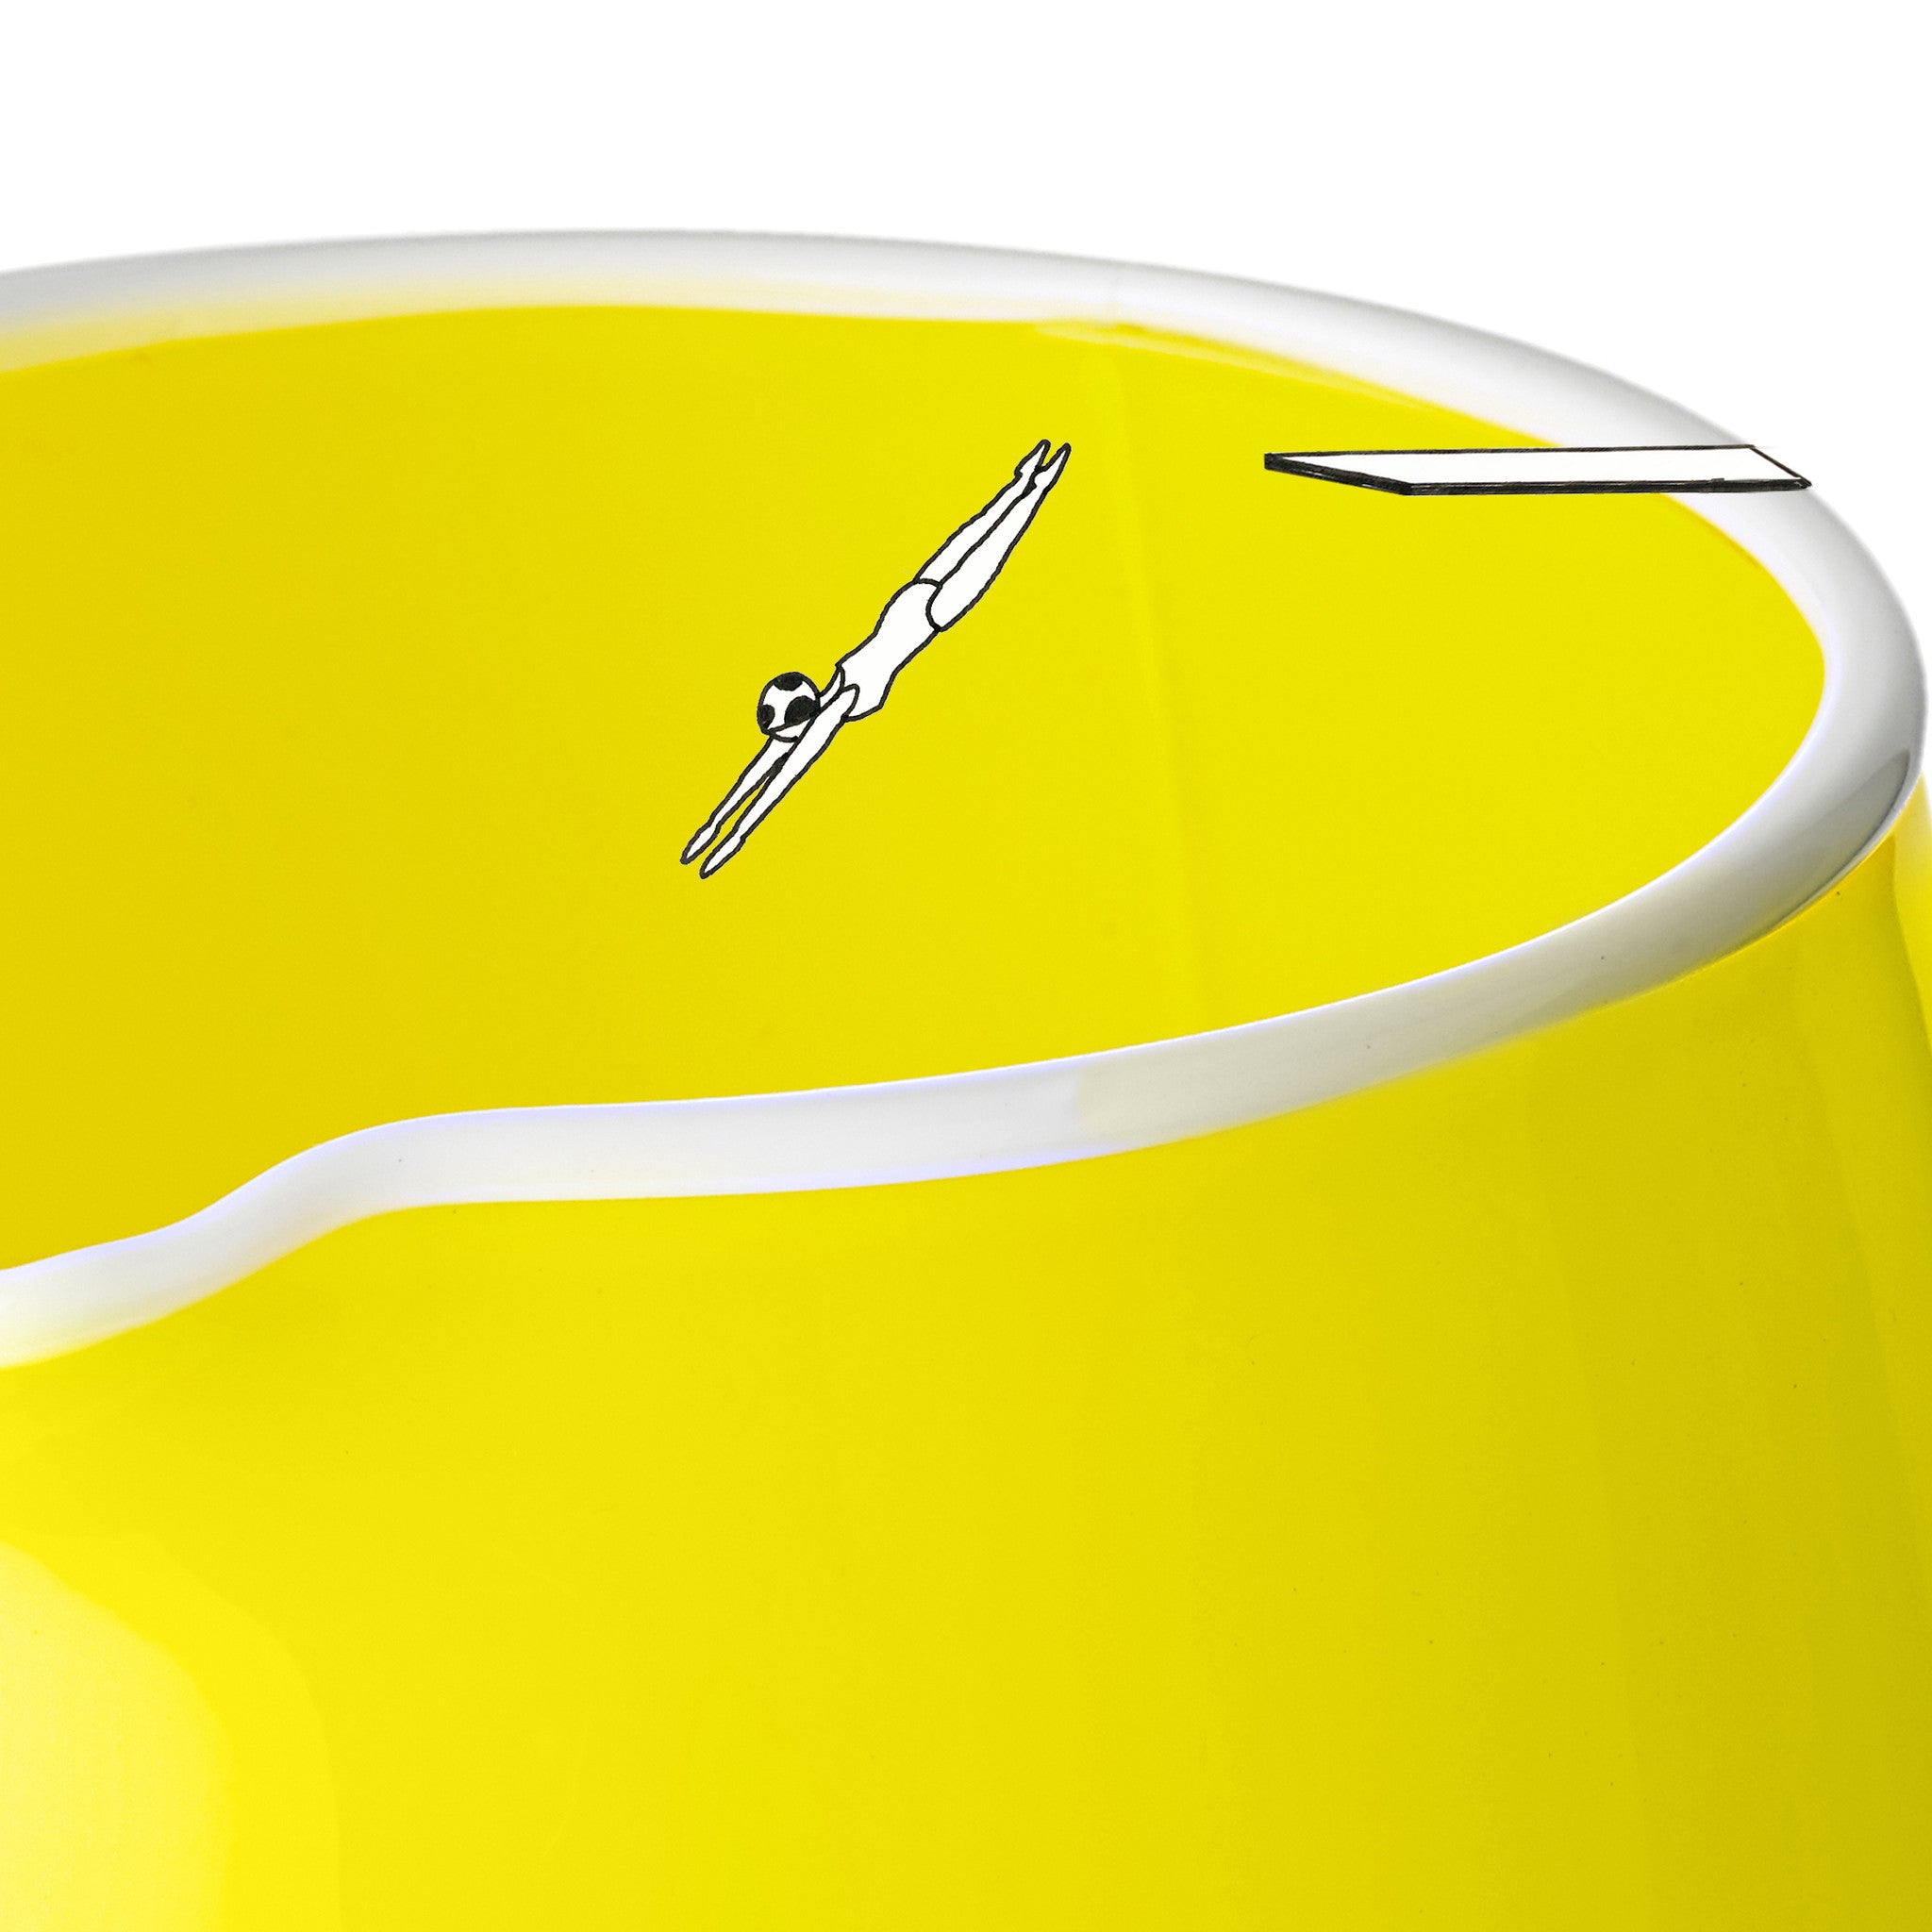 Handblown Glass Bumba Jug in Lemon Yellow, 3lt